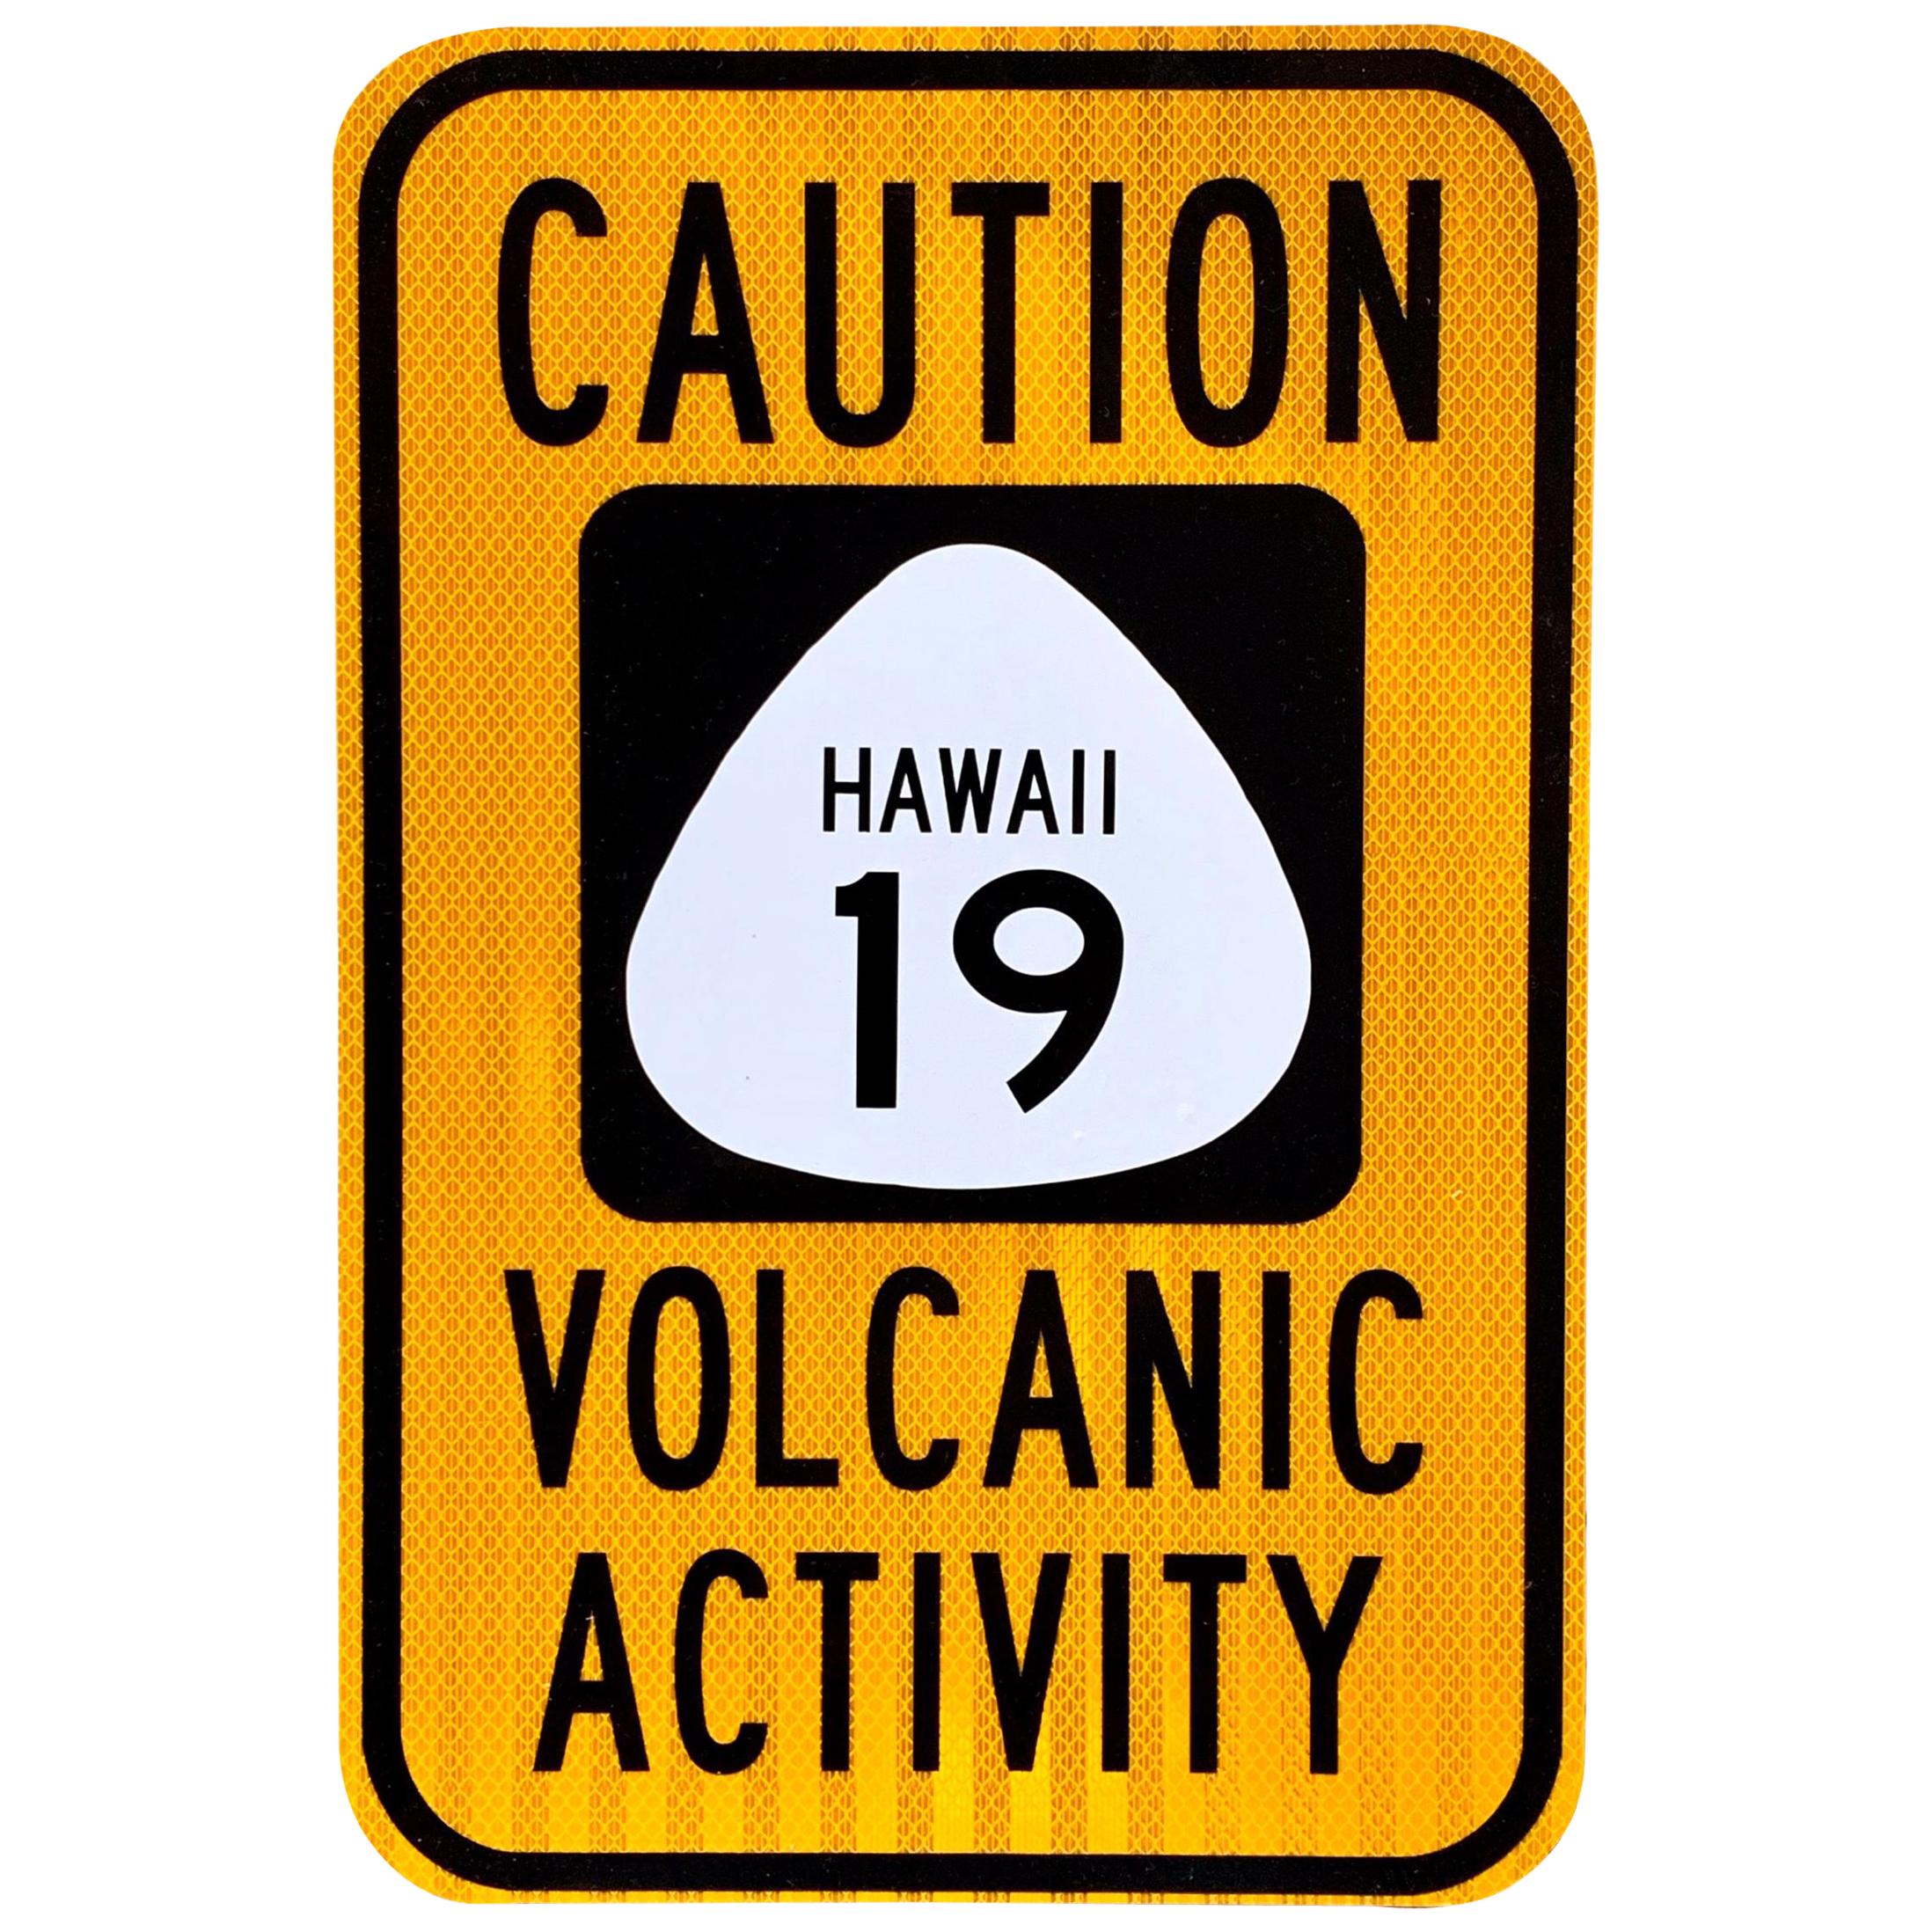 Hawaii "Volcanic Activity" Vintage Road Sign